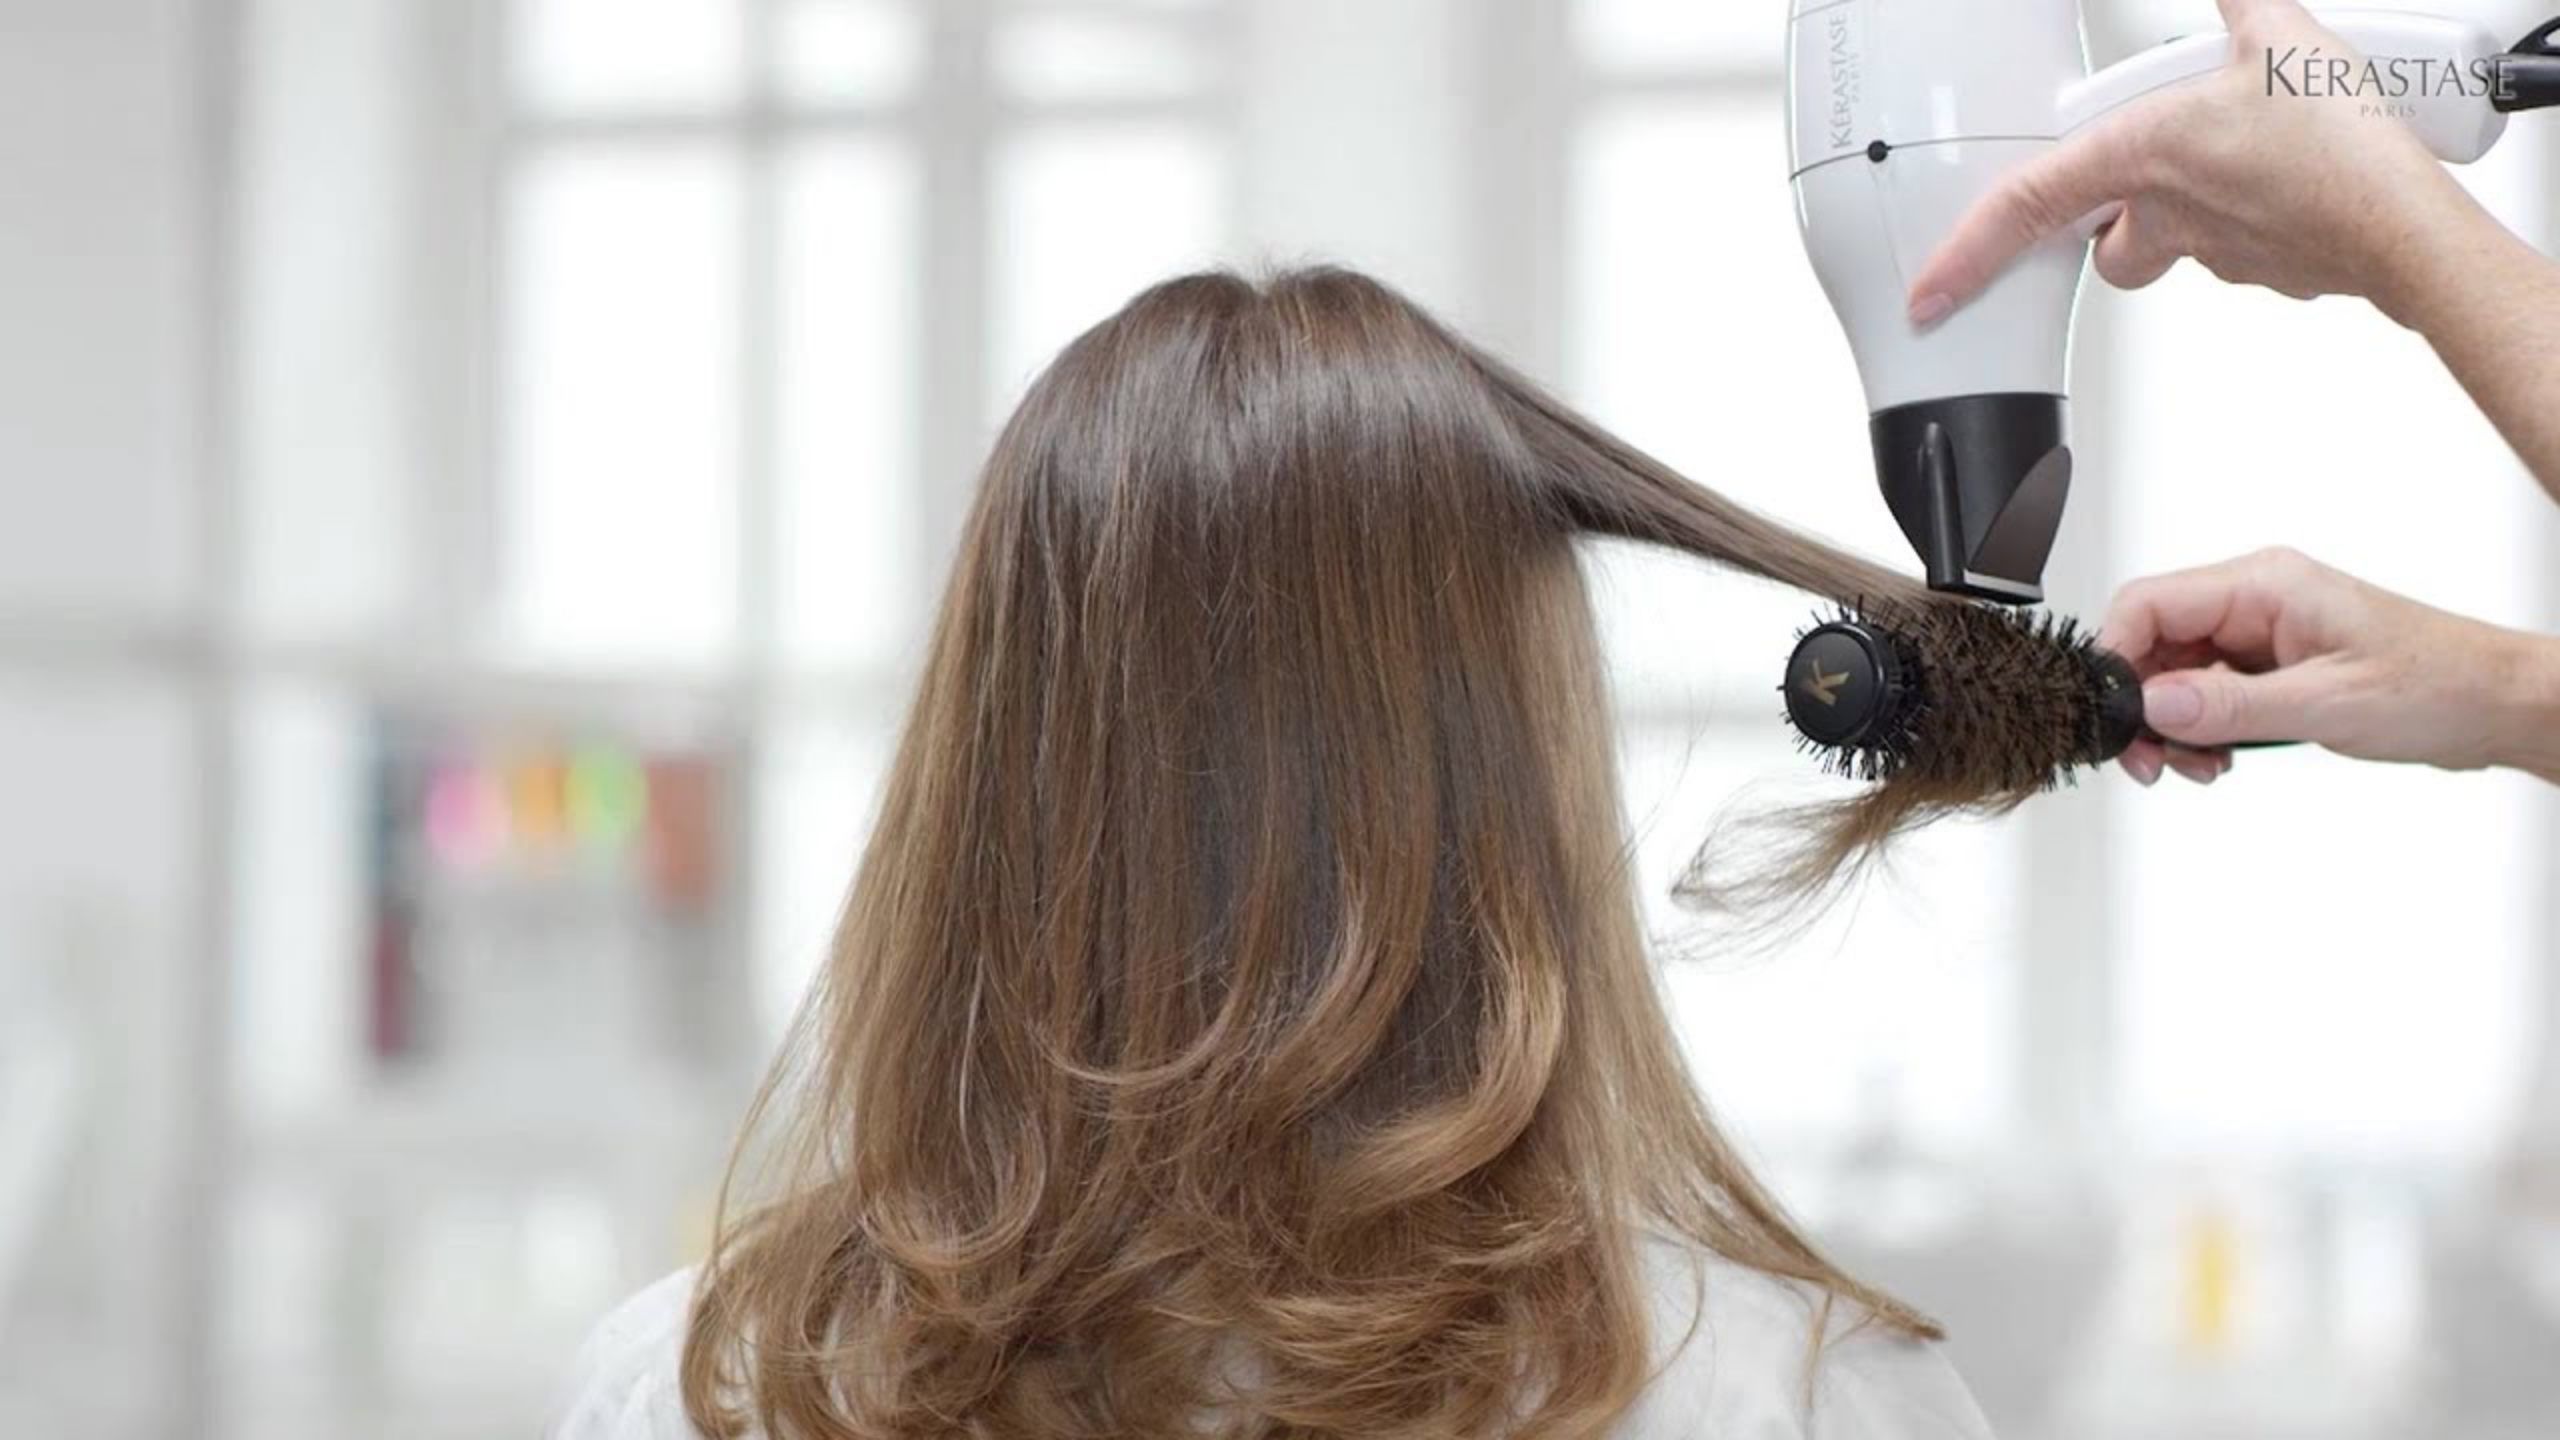 national sammentrækning stemning Spa review: A quick hair transformation at Kérastase Hair Spa by La Vie